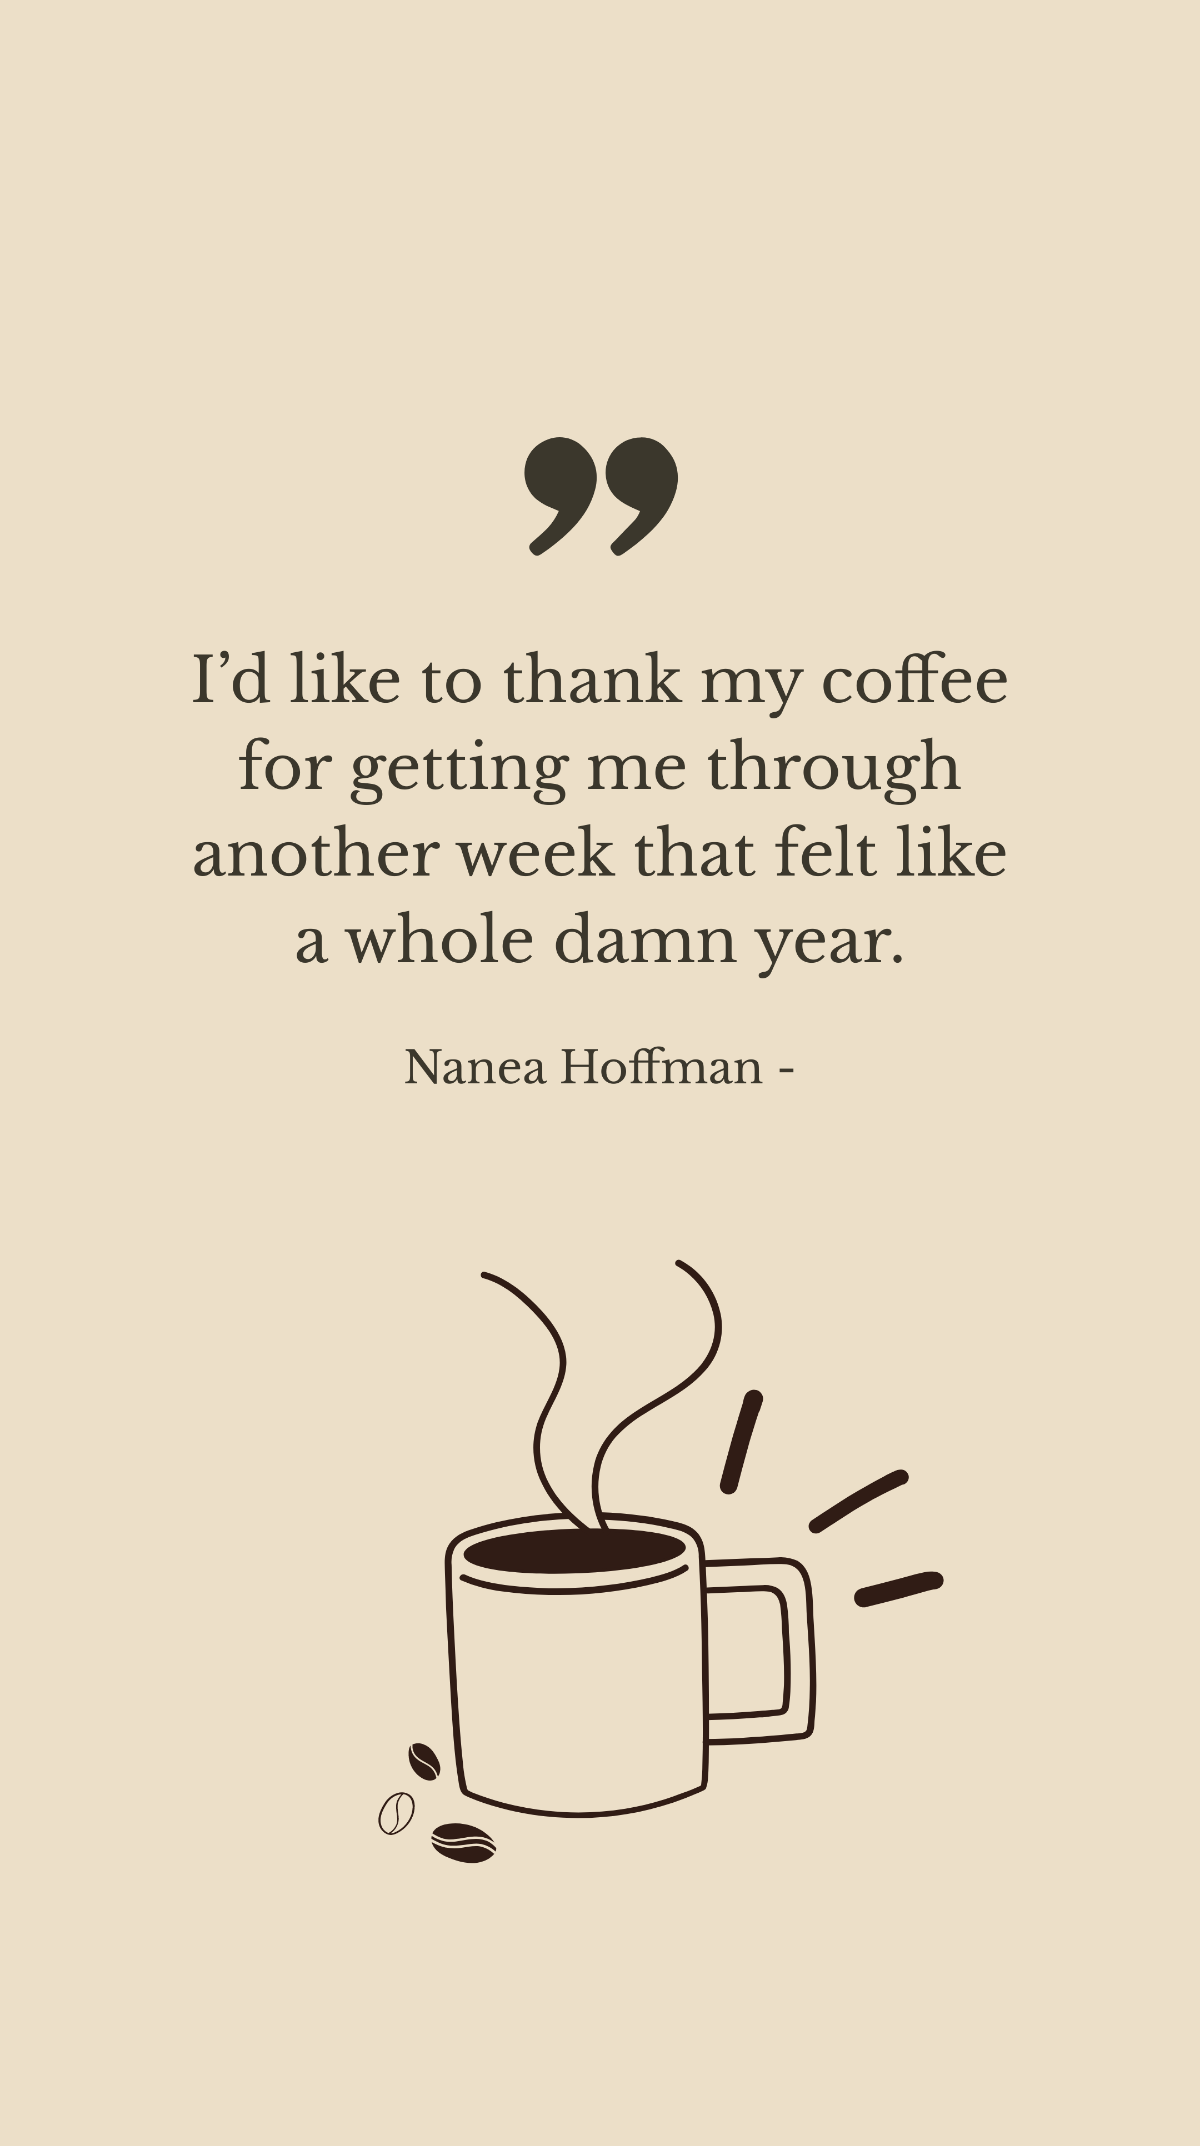 Nanea Hoffman - I’d like to thank my coffee for getting me through ...